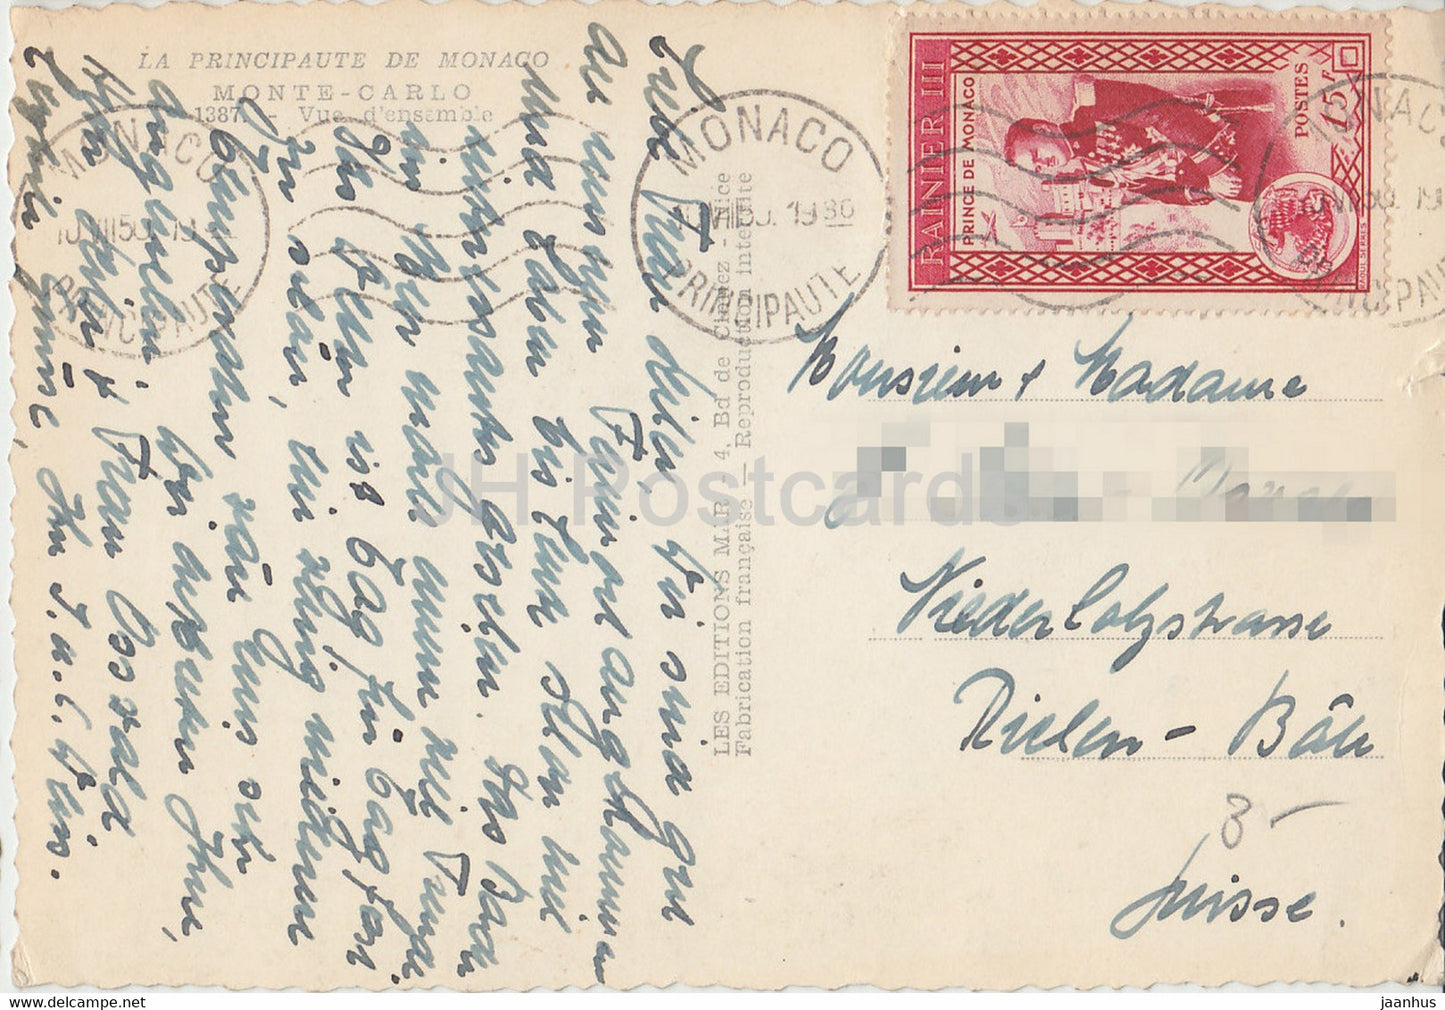 Monte Carlo - Vue d'ensemble - 1387 - old postcard - 1950 - Monaco - used